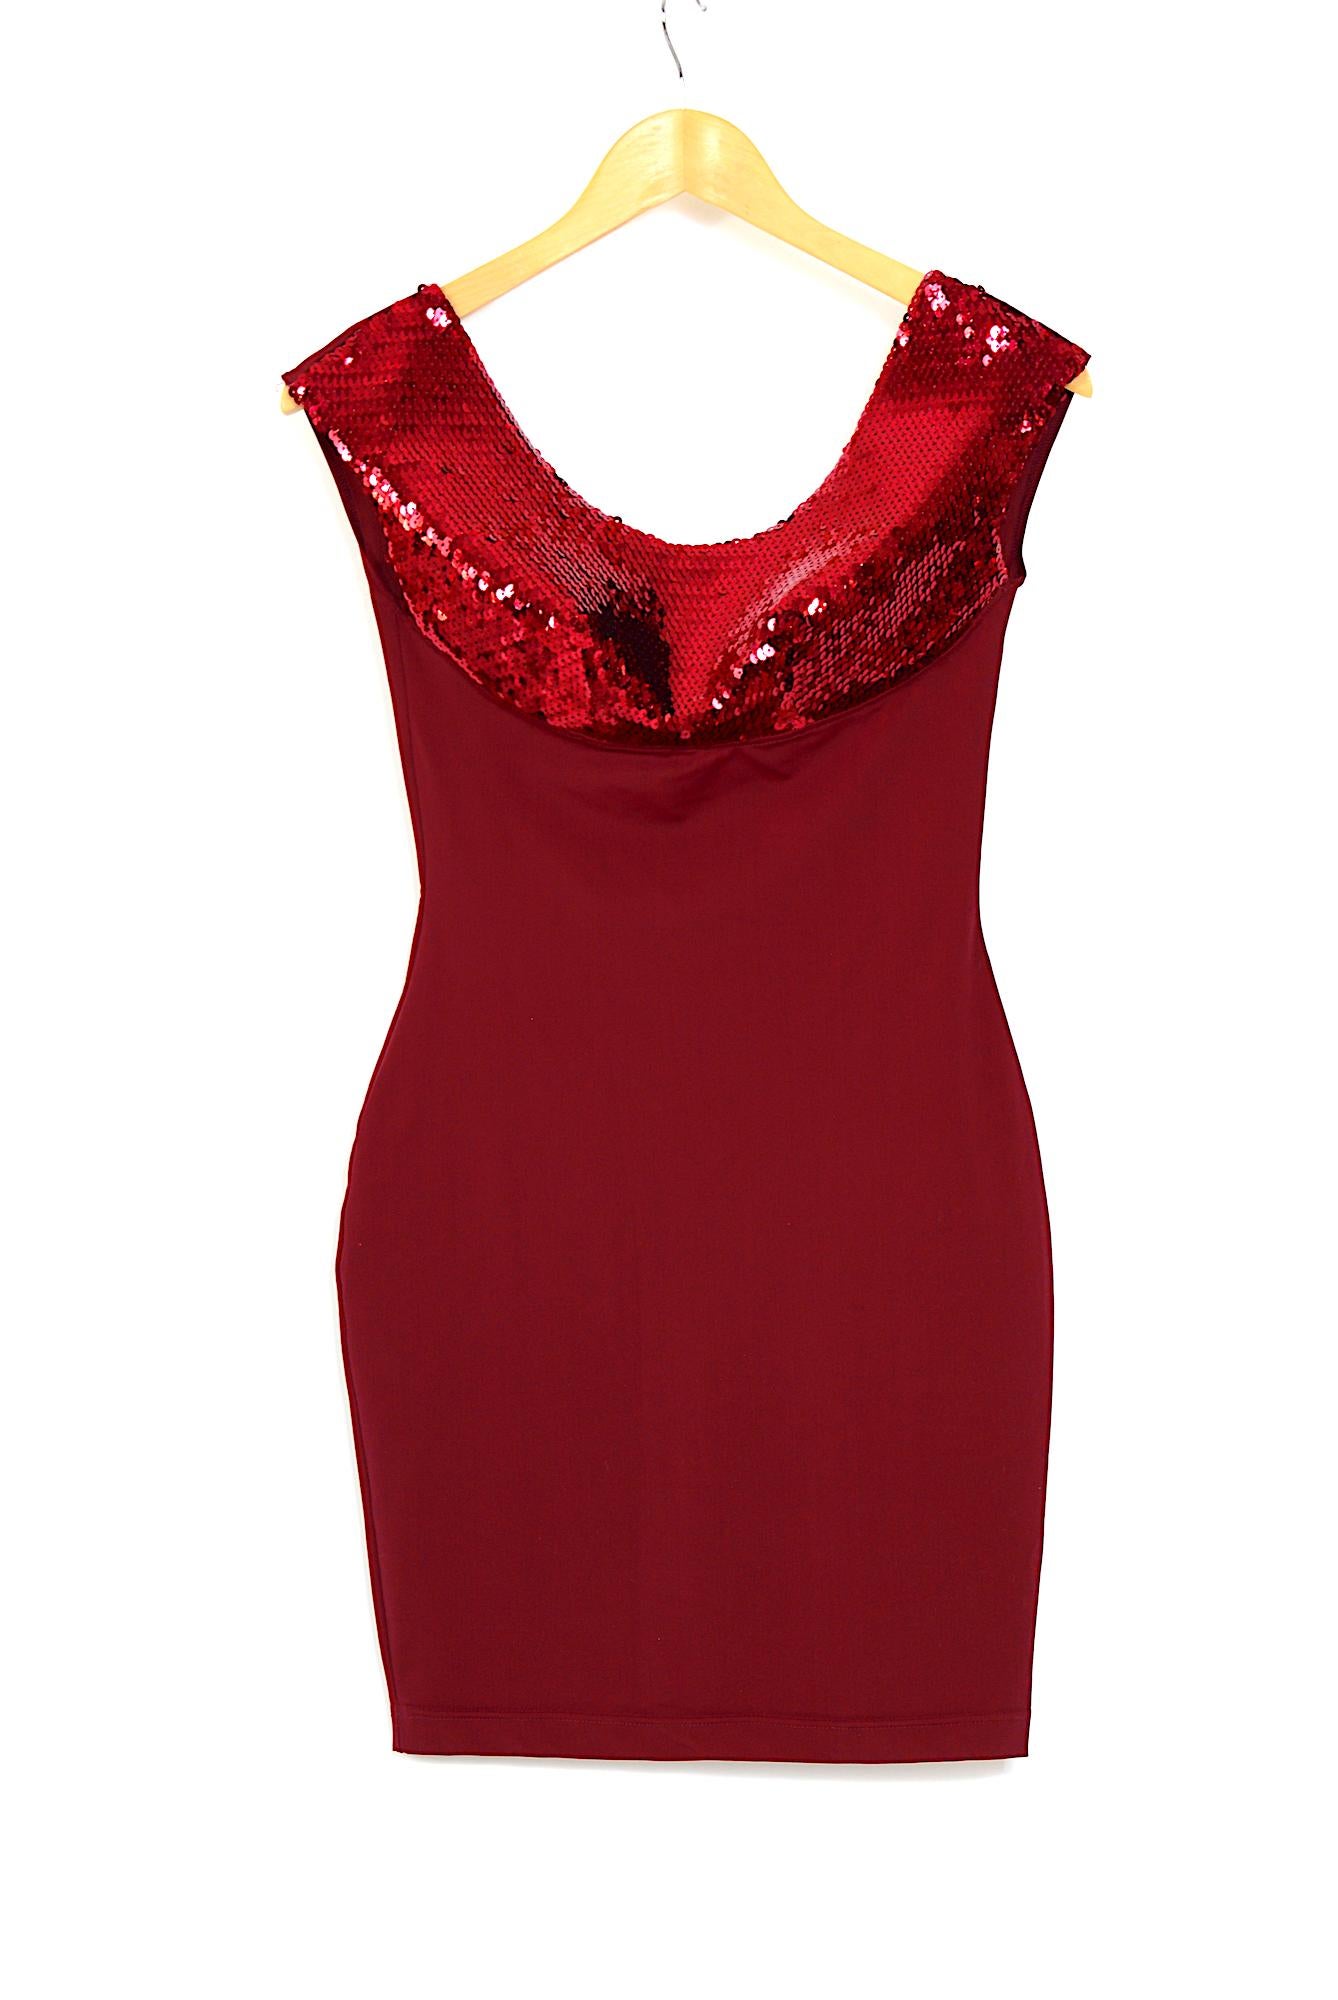 Katharine Hamnett documented 1980s sequin deep wine red dress For Sale 3